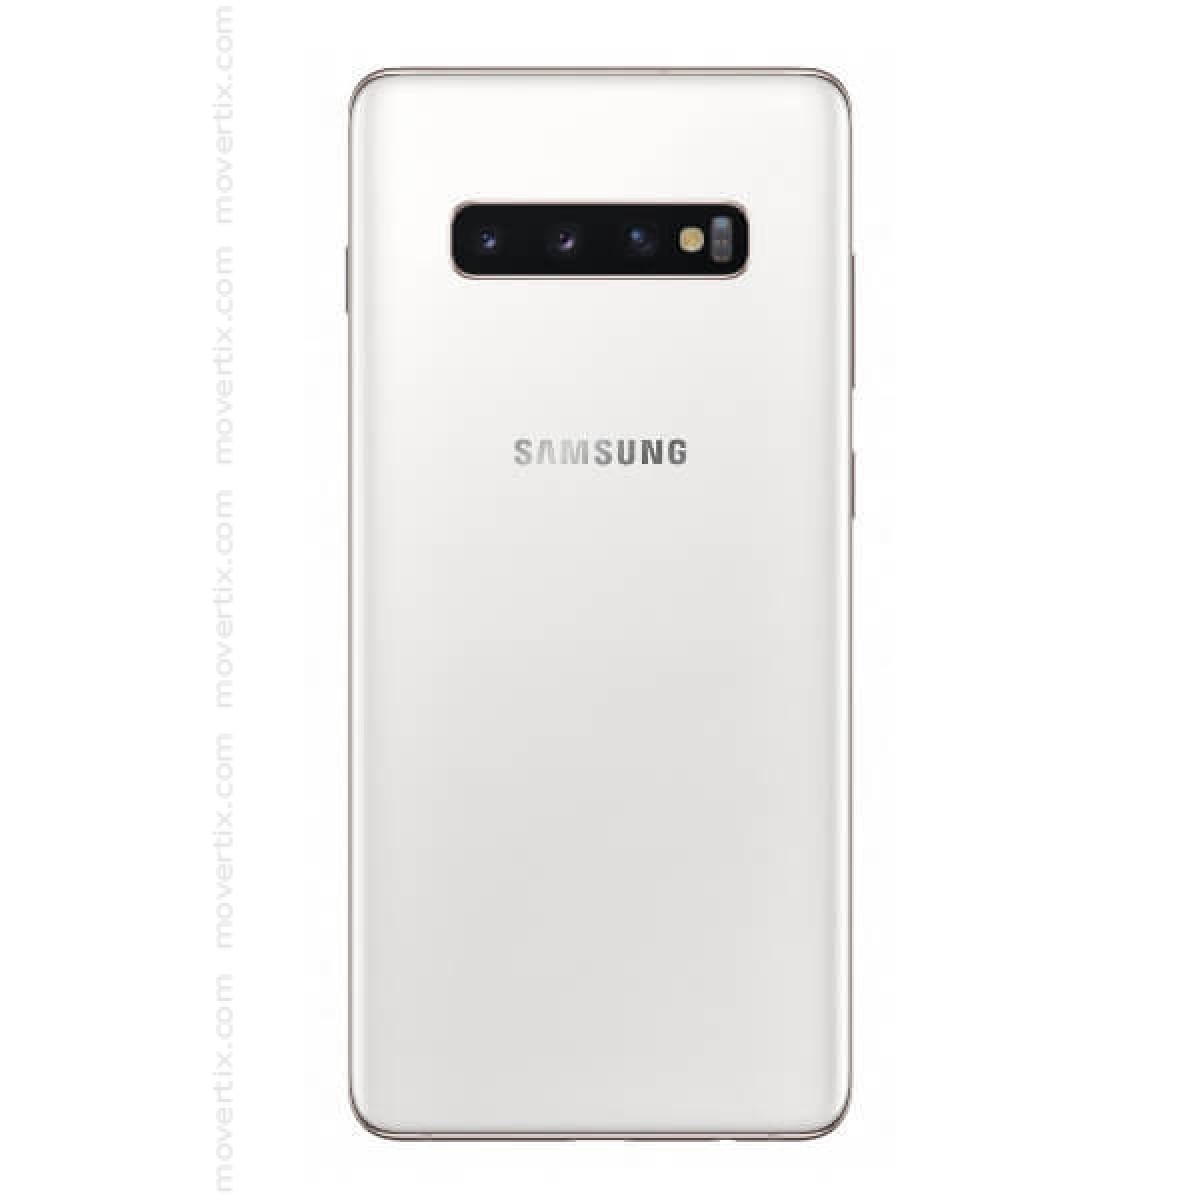 Samsung Galaxy S10 Plus Dual Sim Ceramic White 512gb And 8gb Ram